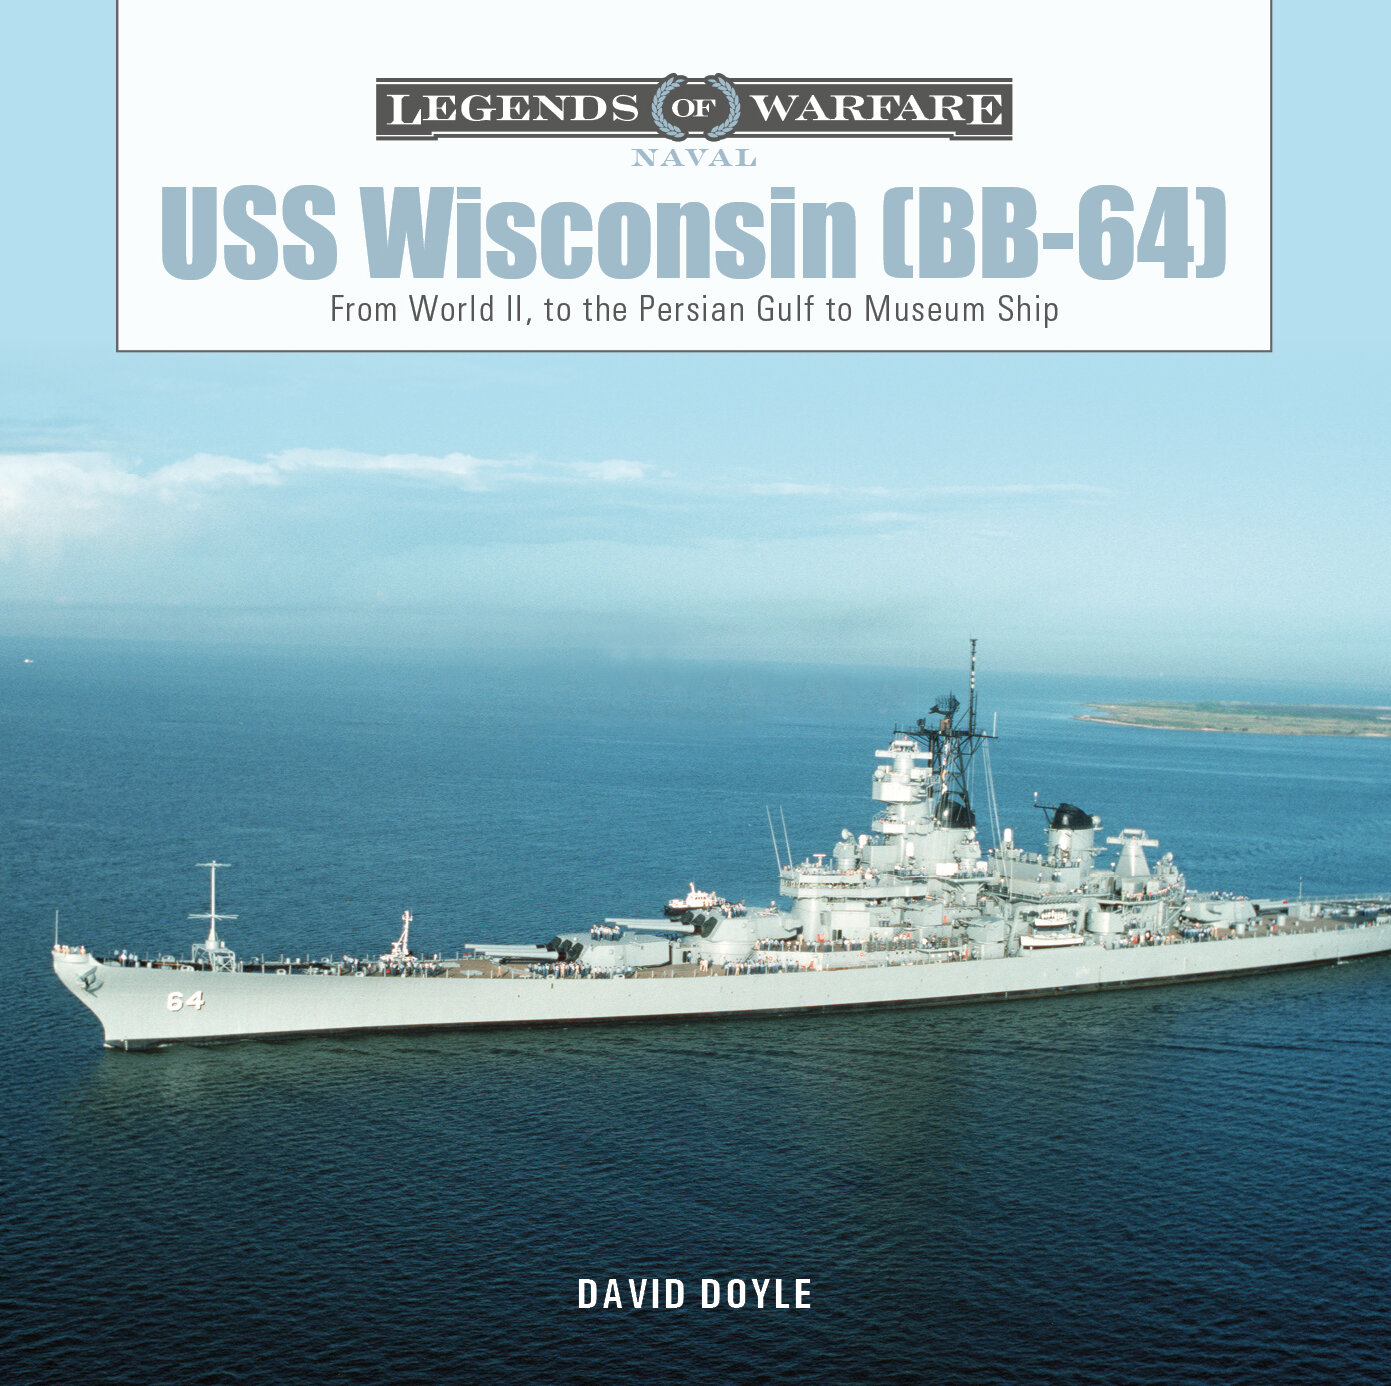 Uss Wisconsin (Bb-64) Wallpapers